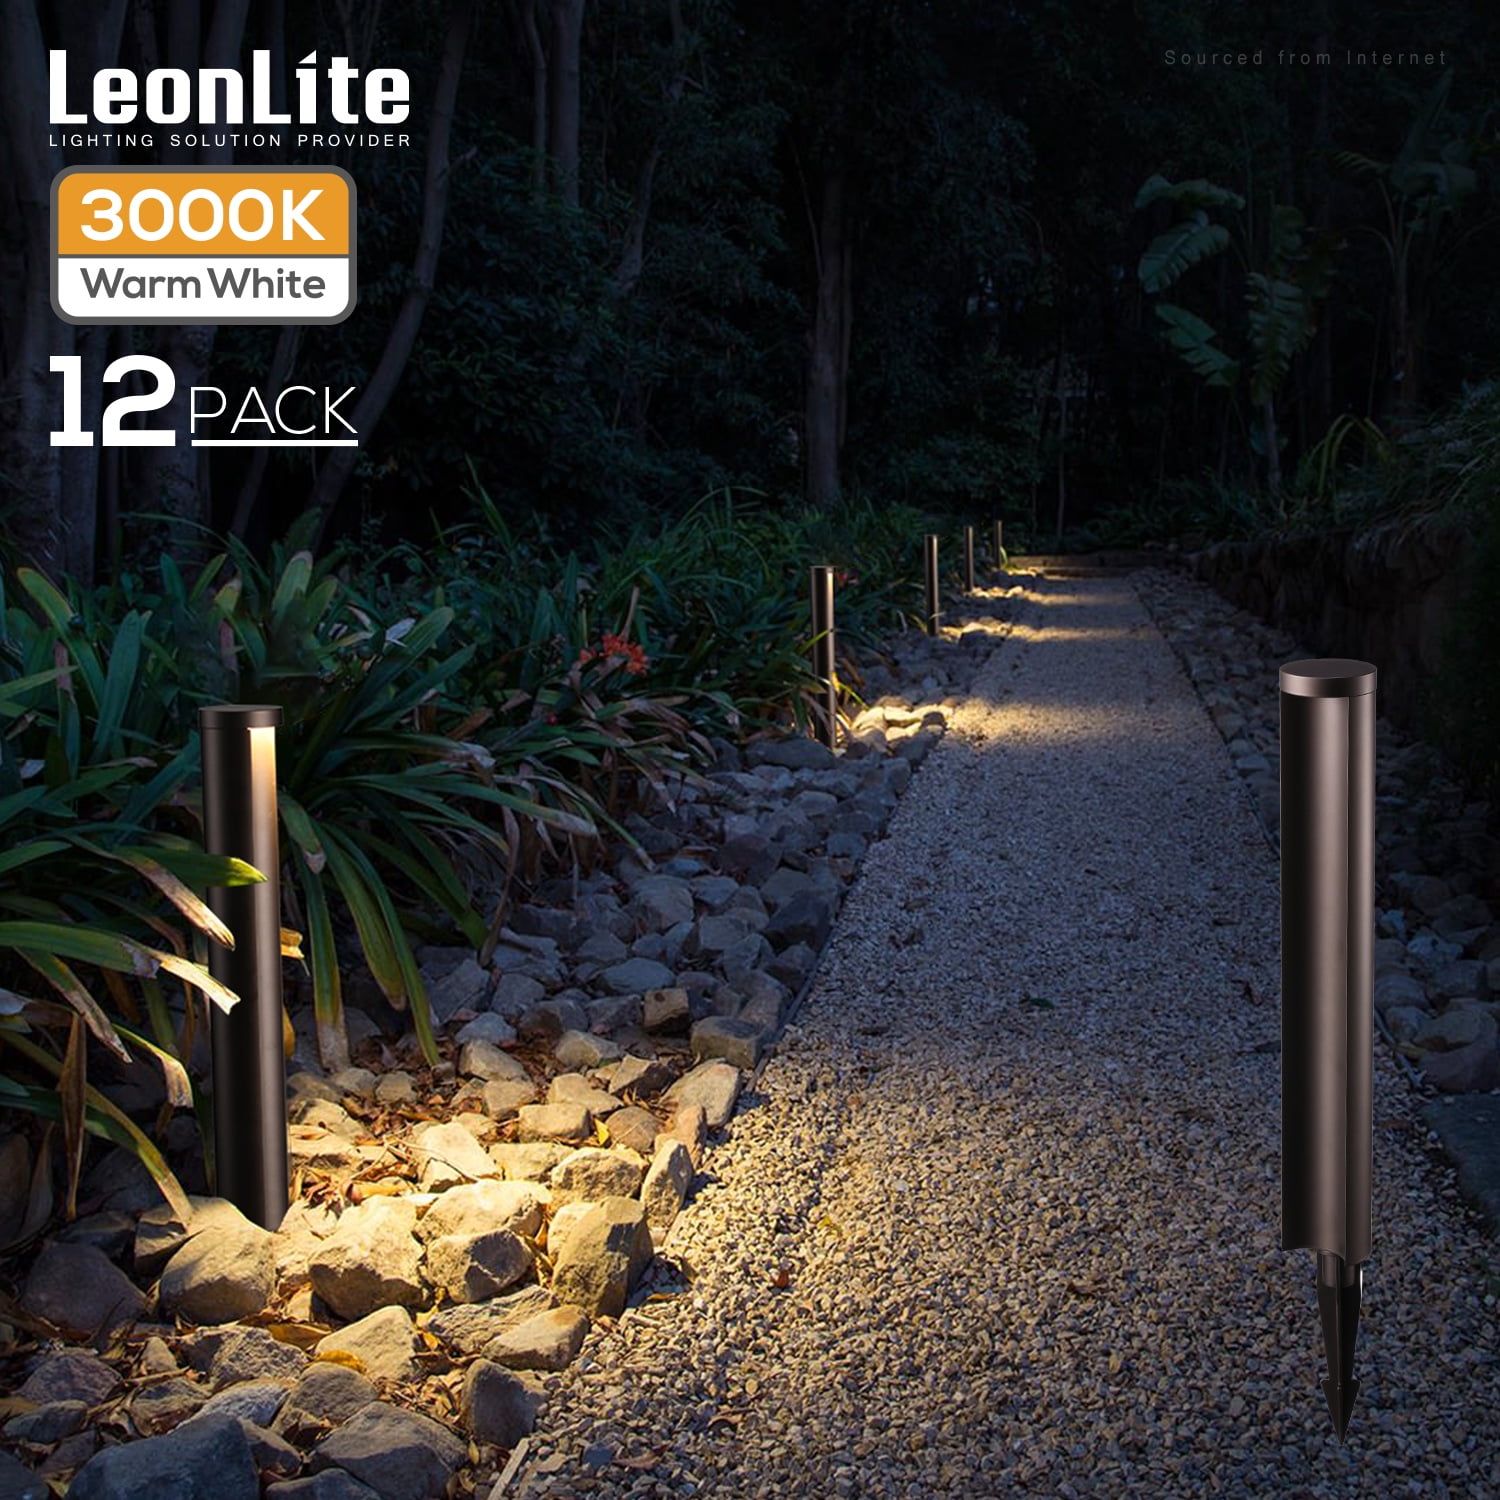 LEONLITE 12-Pack LED Landscape Pathway Light, Low Voltage Side Lit Path  lights, 5W, 12-24V, IP65 Waterproof, for Yard, Driveway, 3000K Warm White 